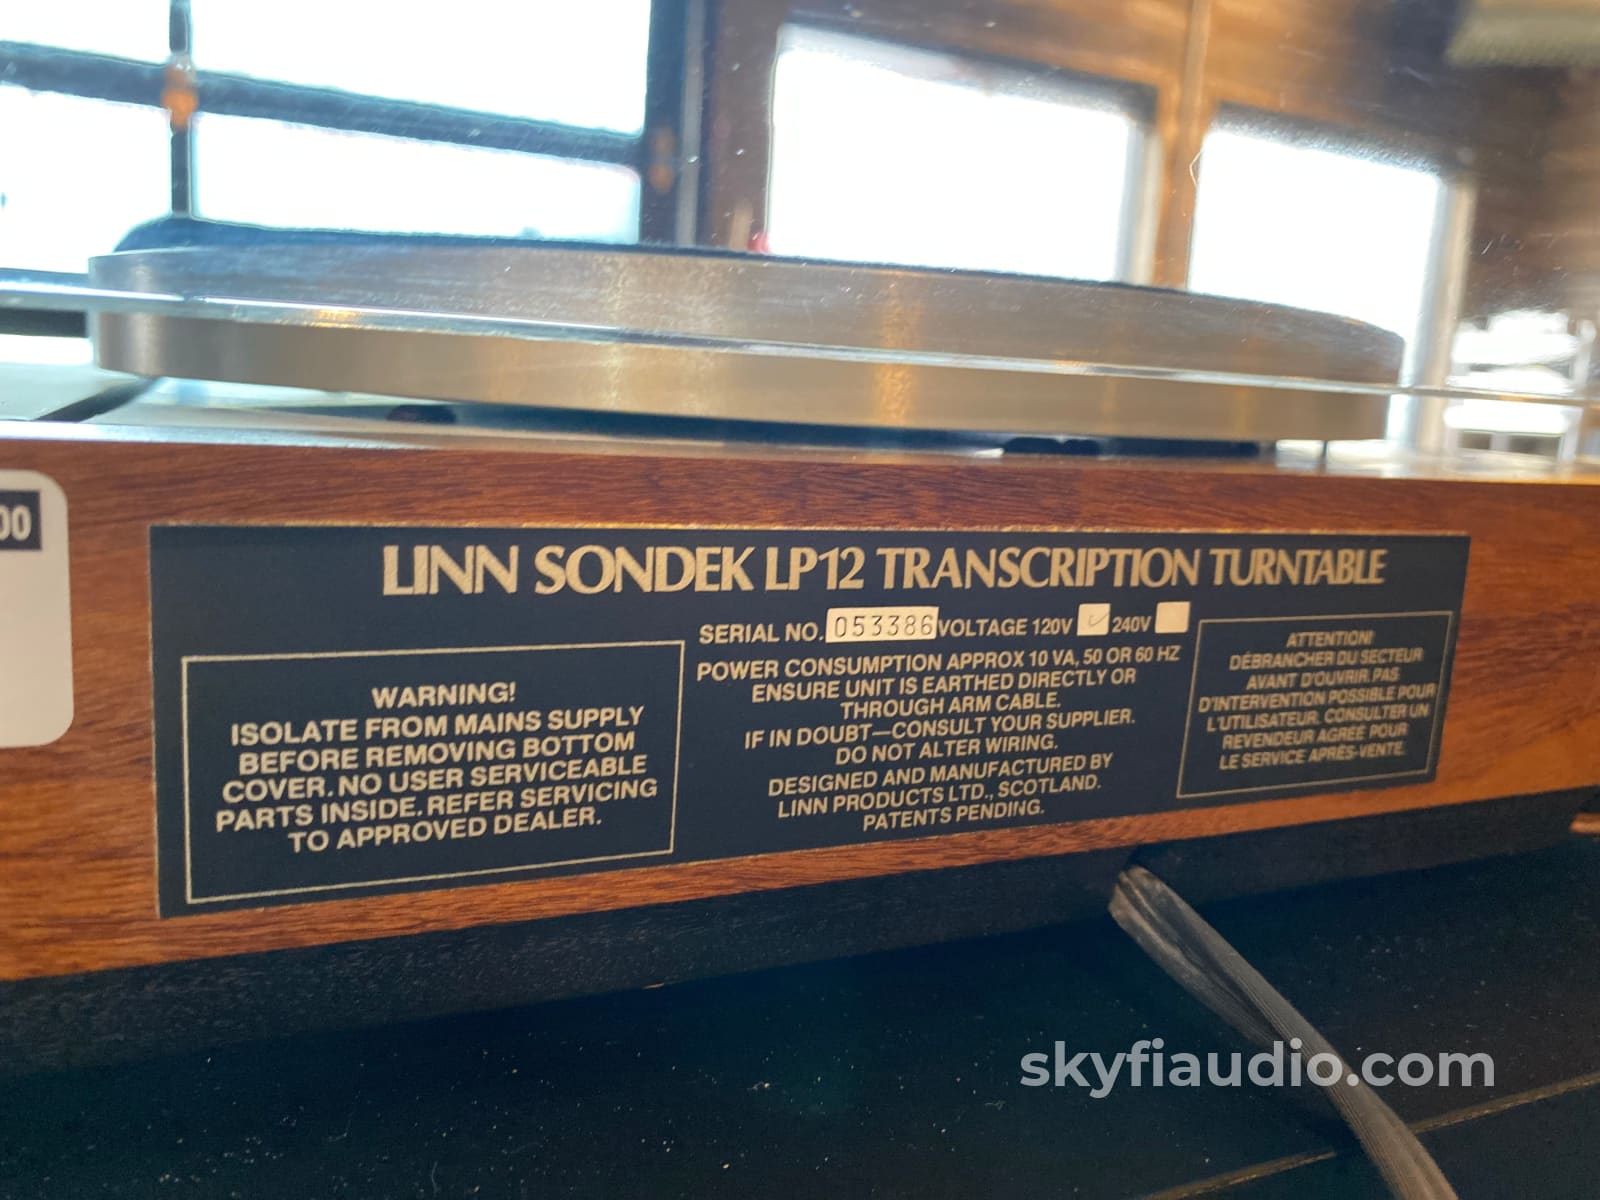 Linn Lp12 Wit Ittok Arm And New Sumiko Bluepoint No.3 Mc Cartridge Turntable